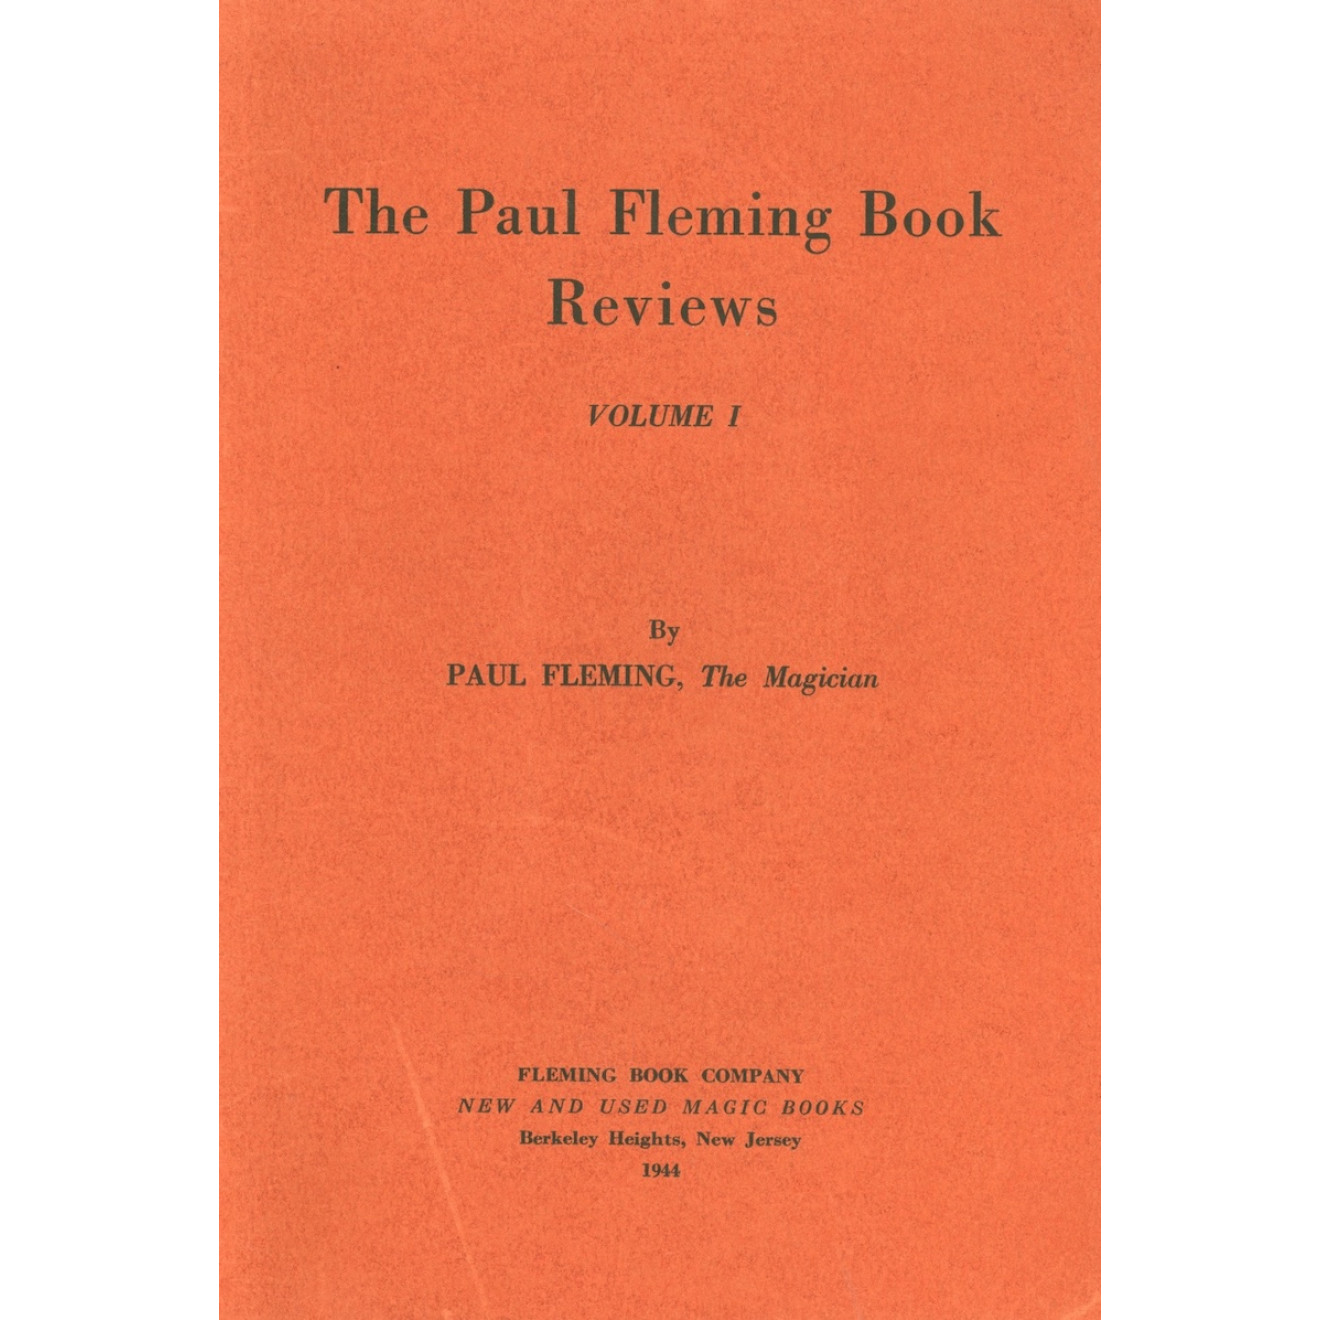 The Paul Fleming Book Reviews, Volume 1